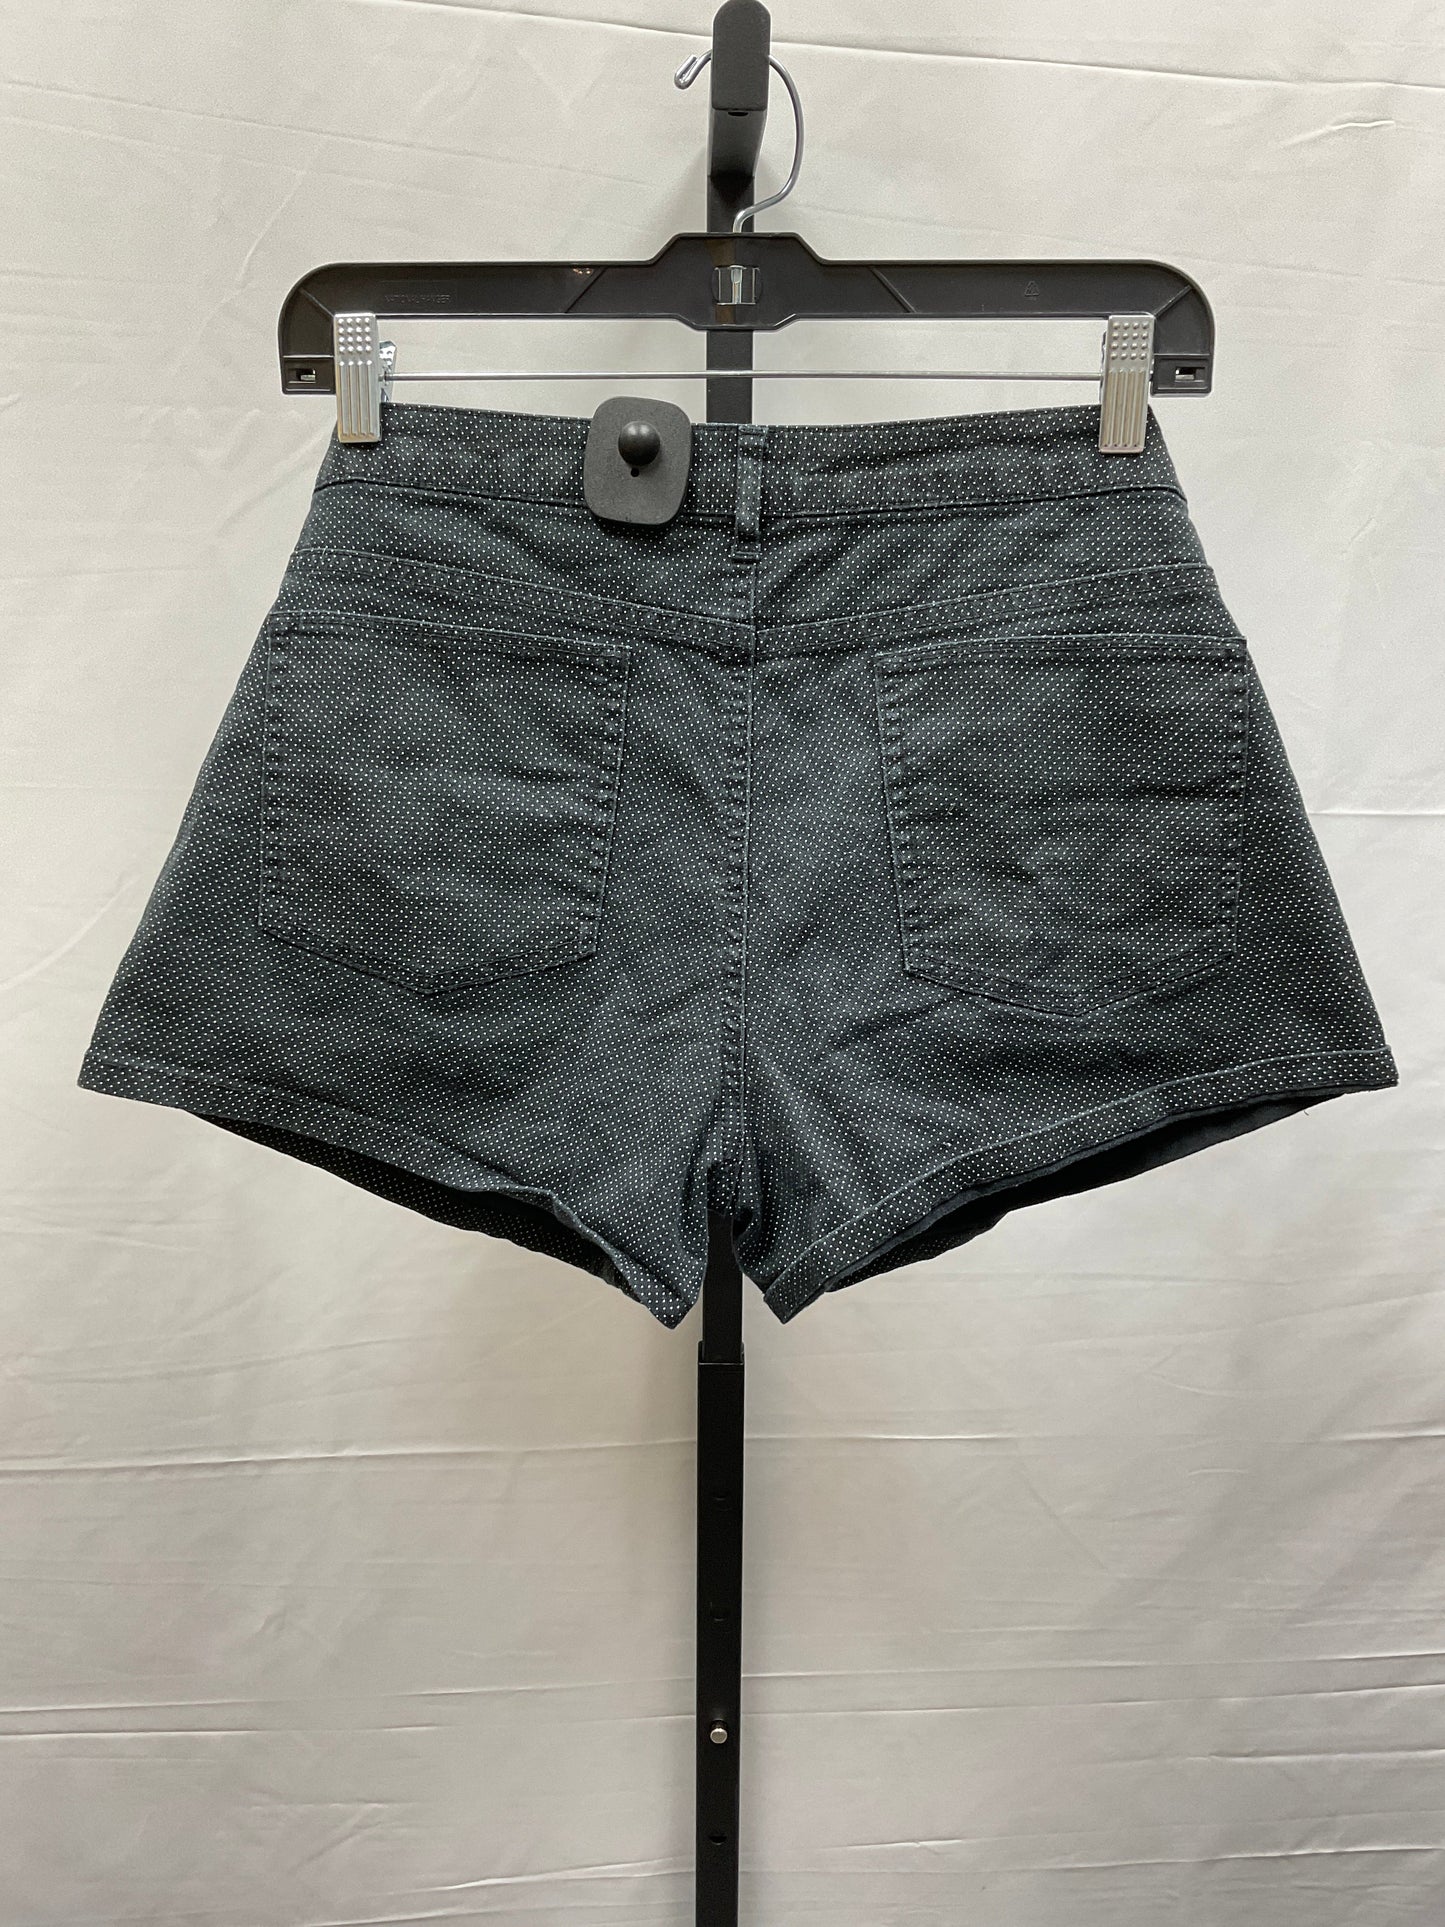 Black Shorts H&m, Size 12